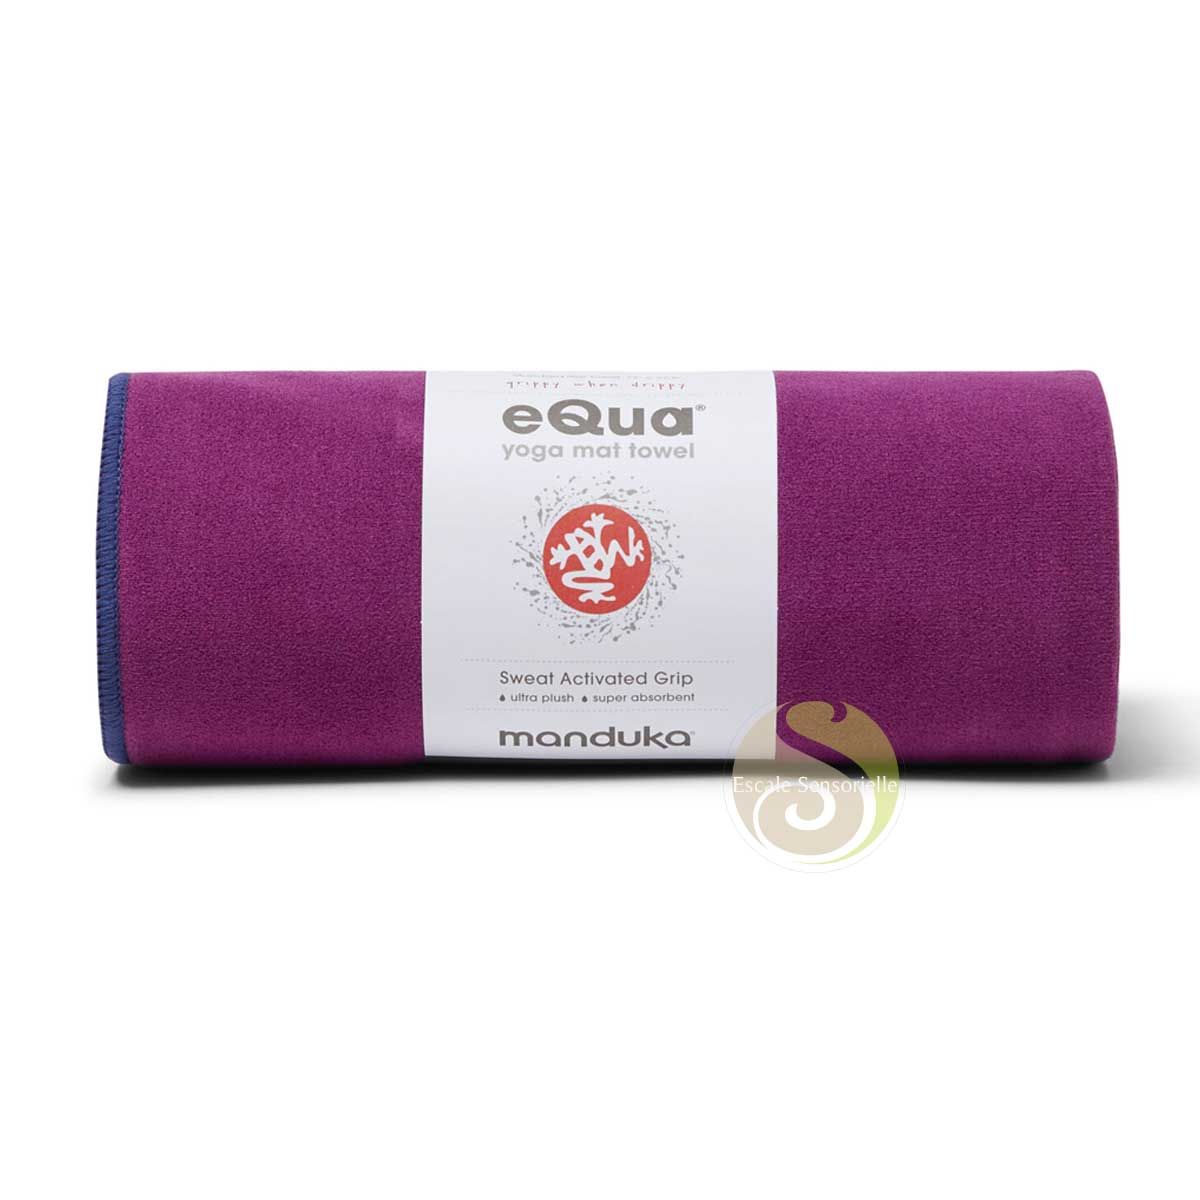 Serviette grand format pour tapis de yoga Manduka eQua purple lotus